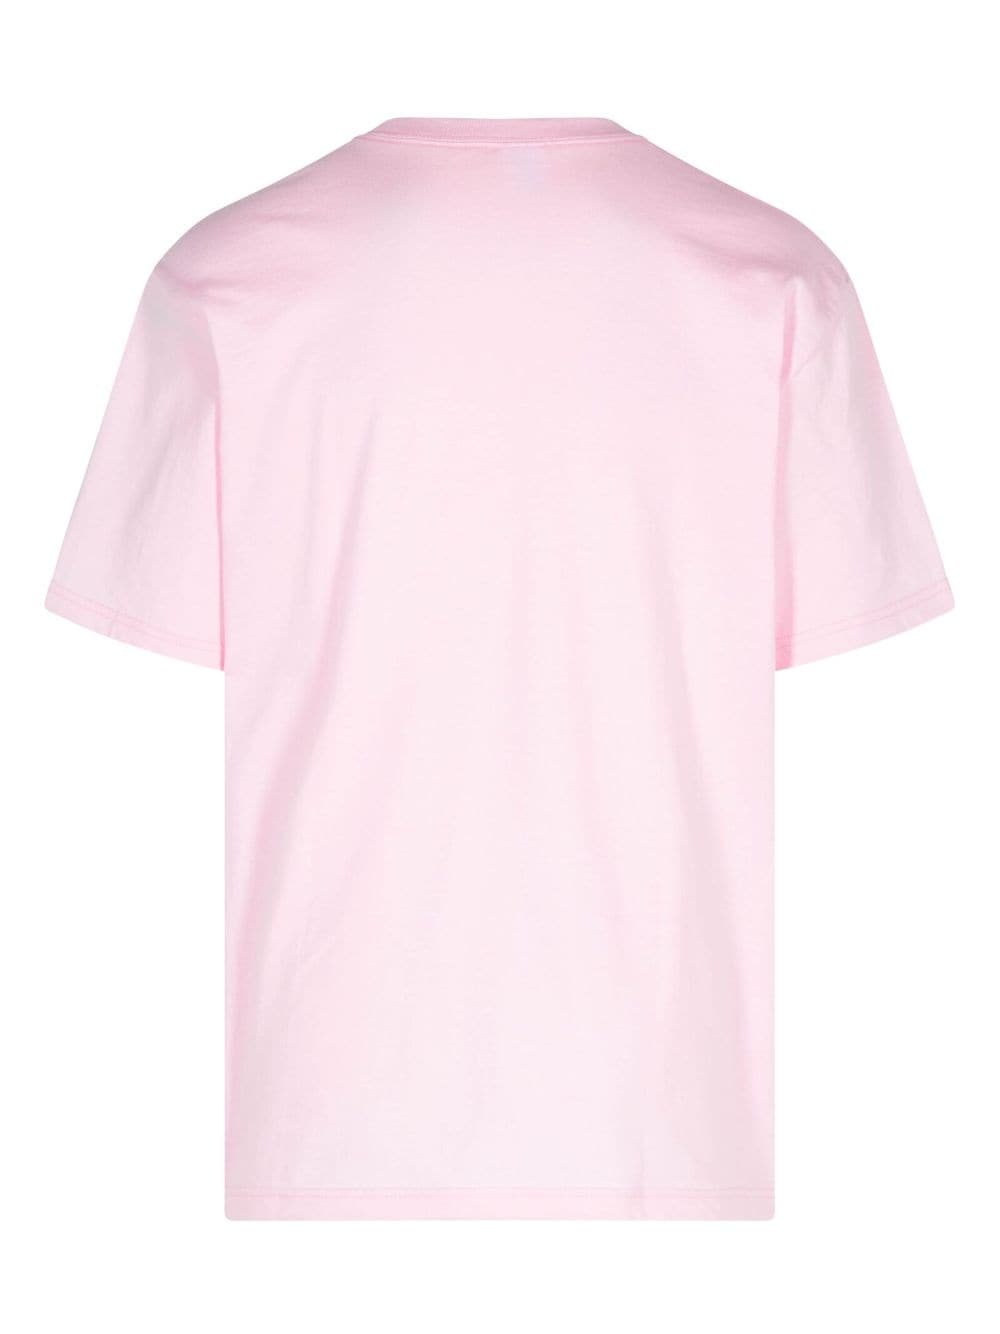 NBA Youngboy cotton T-shirt - 2